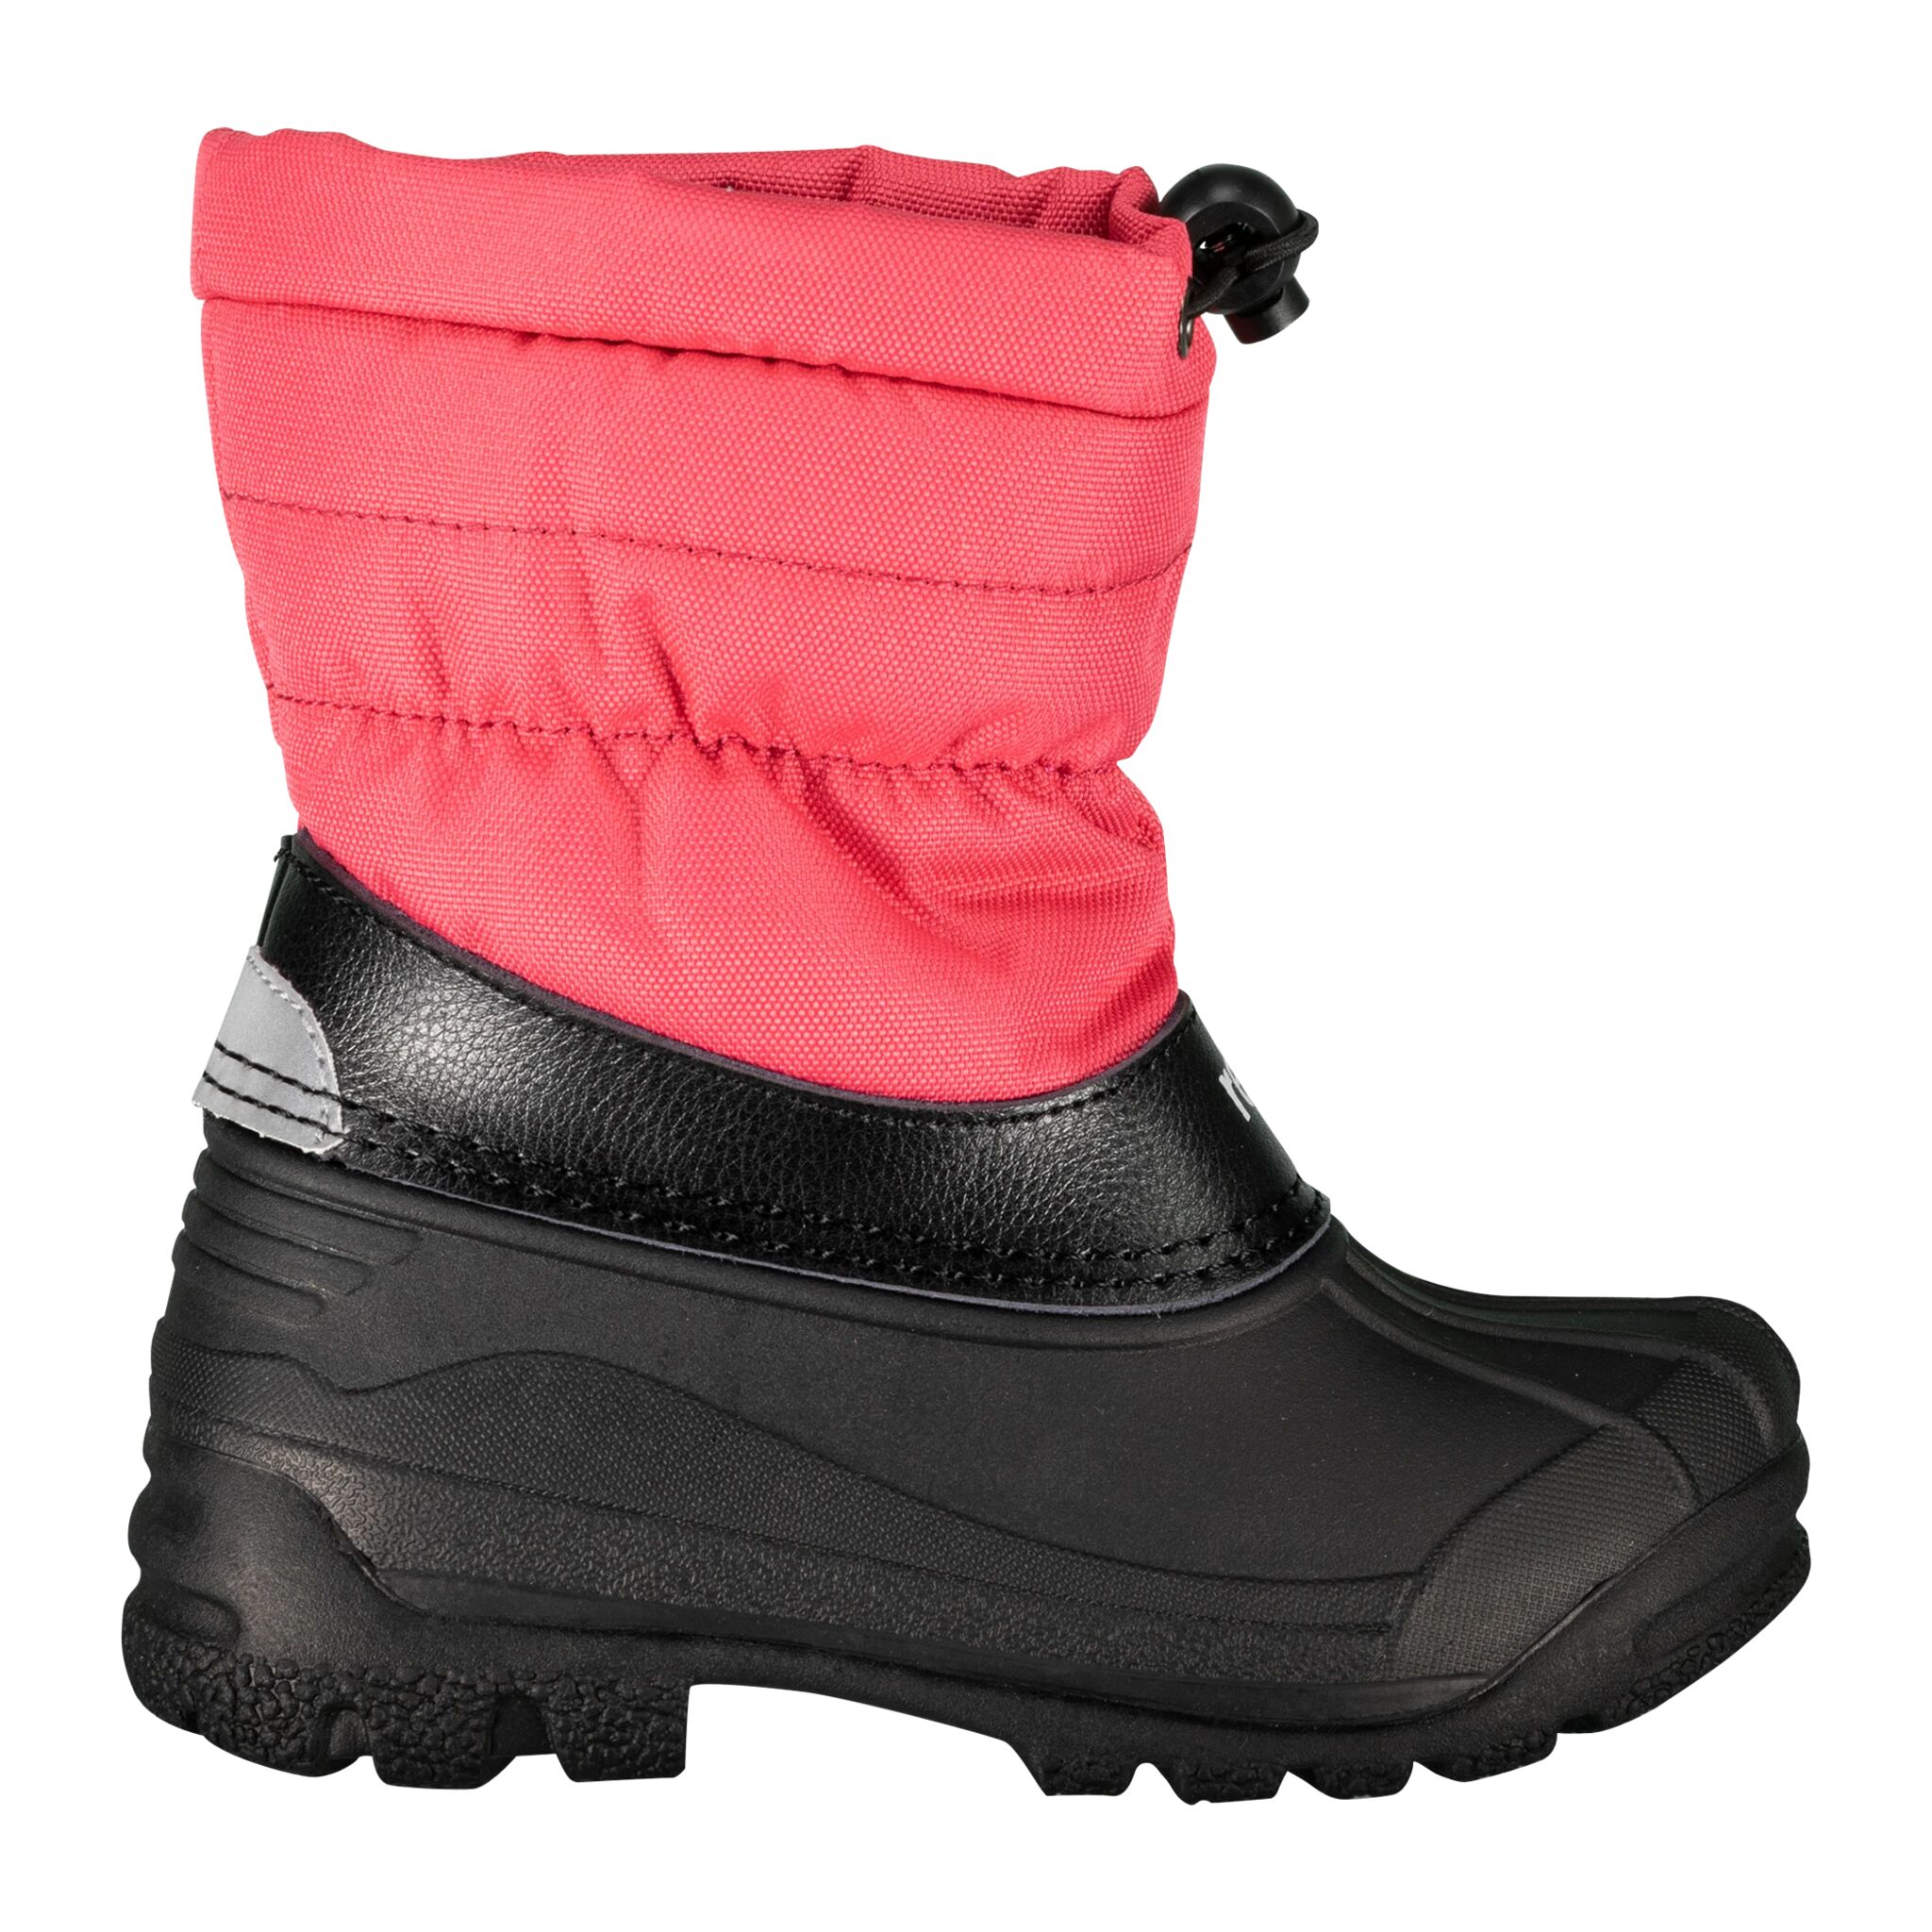 Reima Winter boots Nefar, vintersko barn 29 Azalea Pink